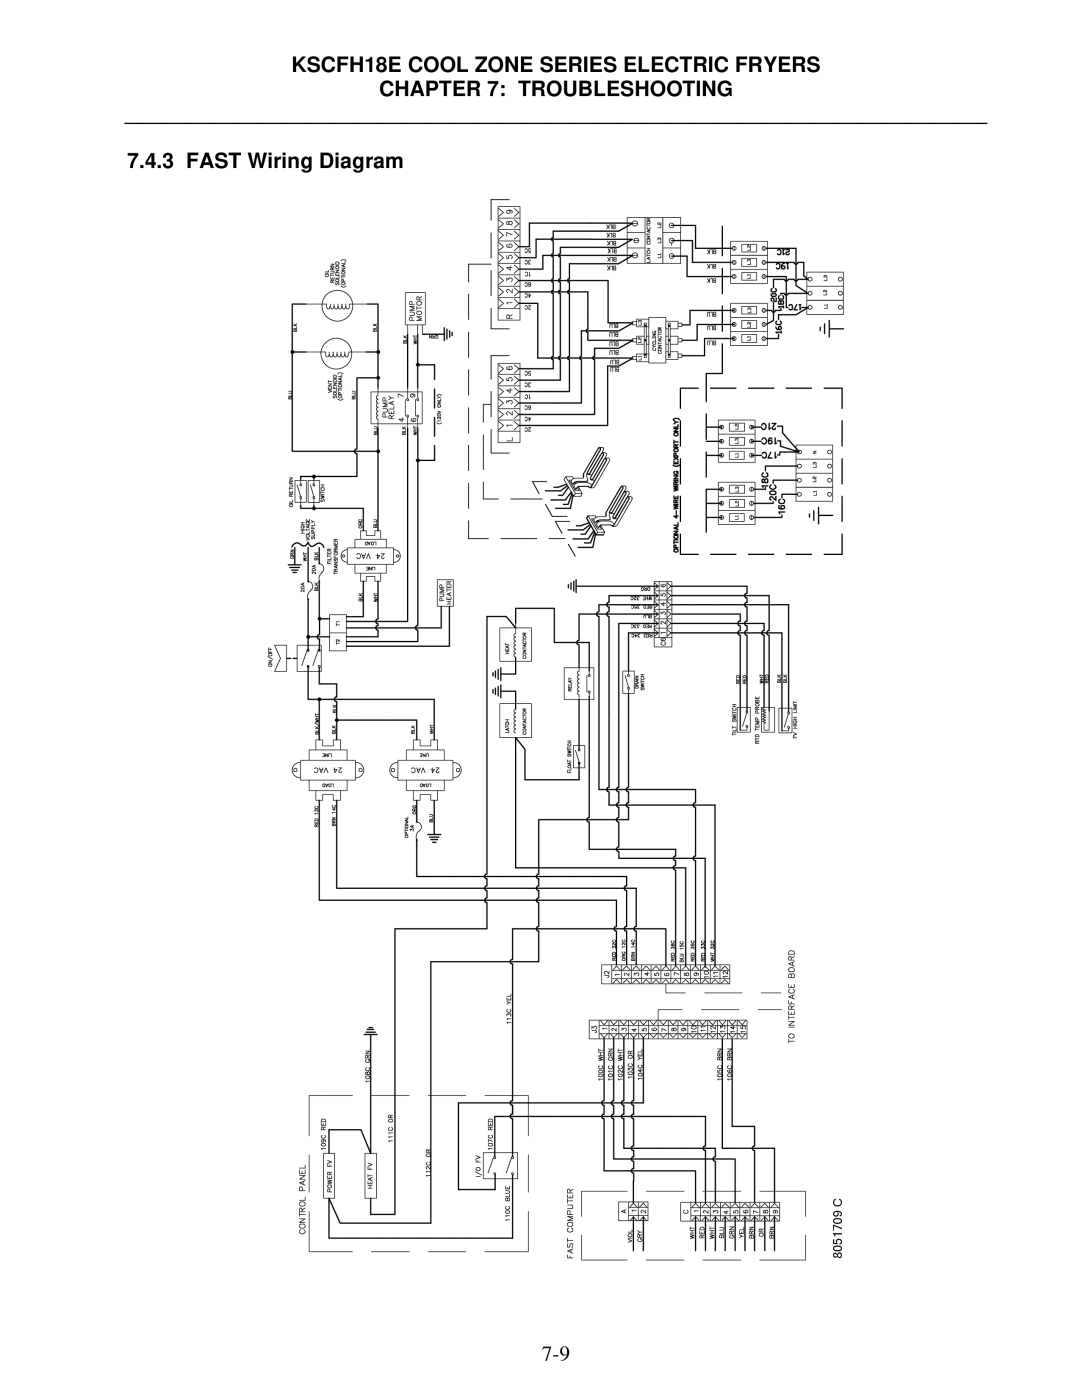 Frymaster KSCFH18E operation manual Fast Wiring Diagram 